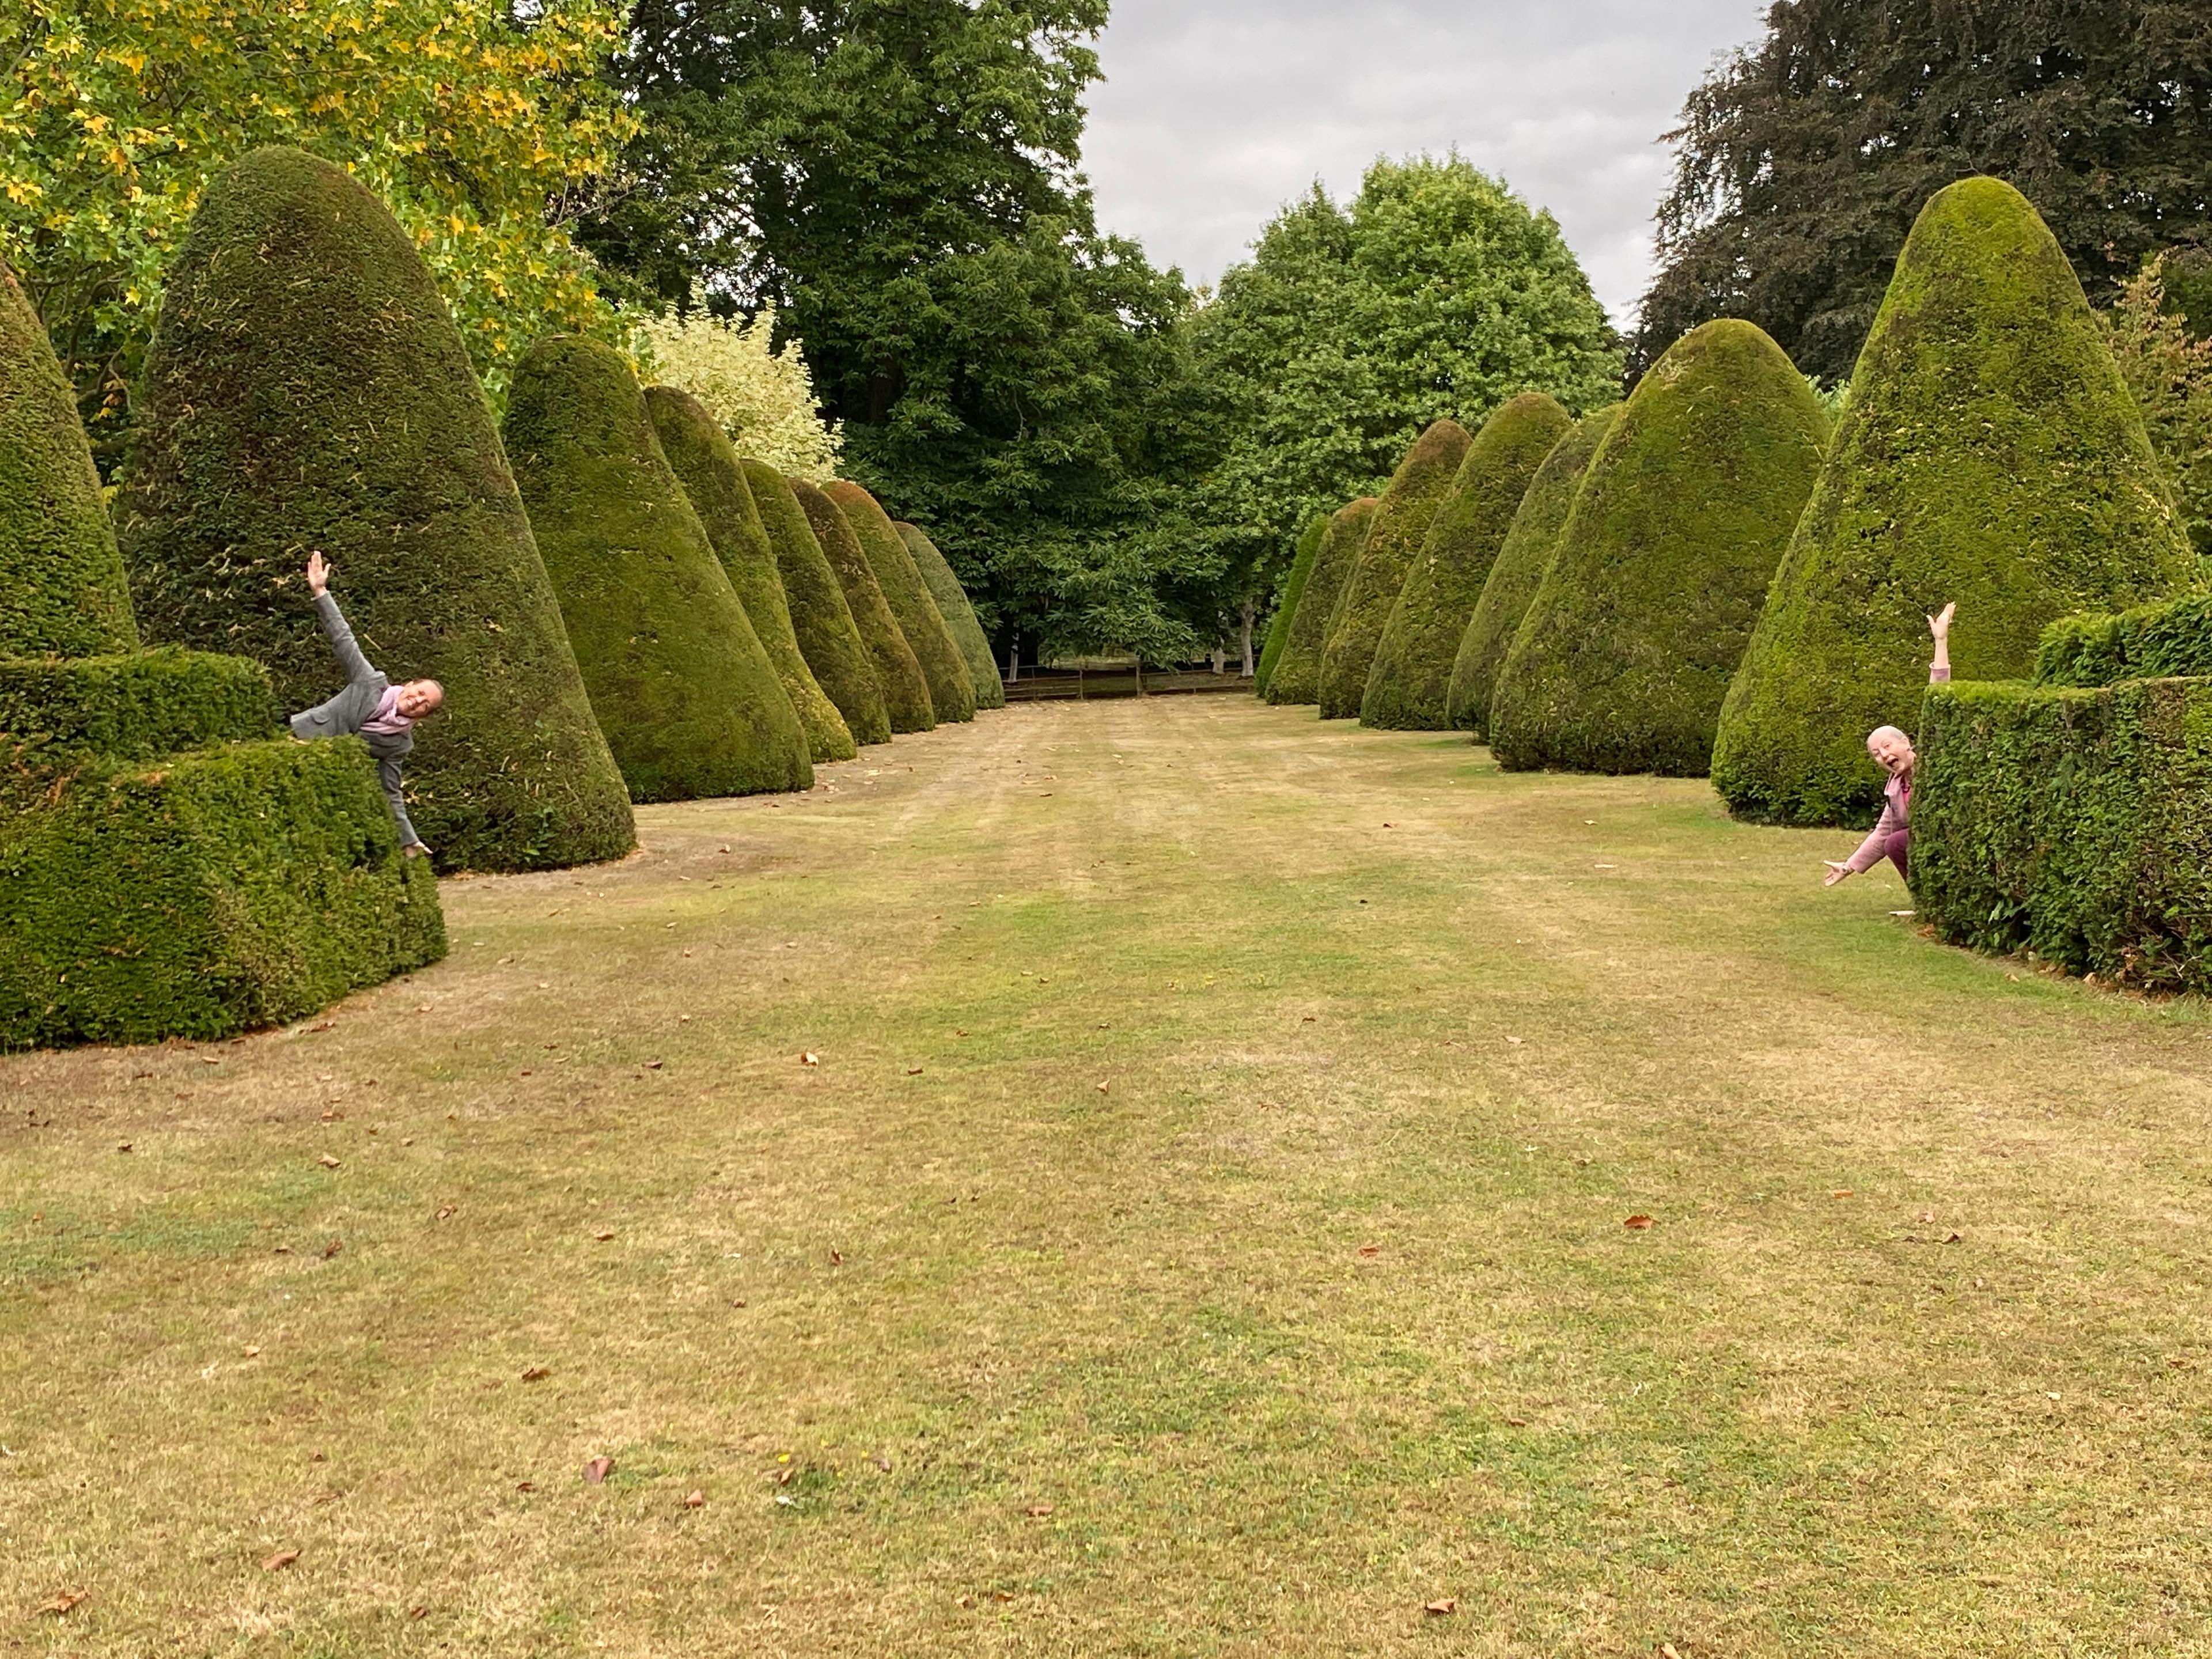 Ninya (left) and Jane (right) enjoying the splendid gardens at Holme Pierrepont Hall